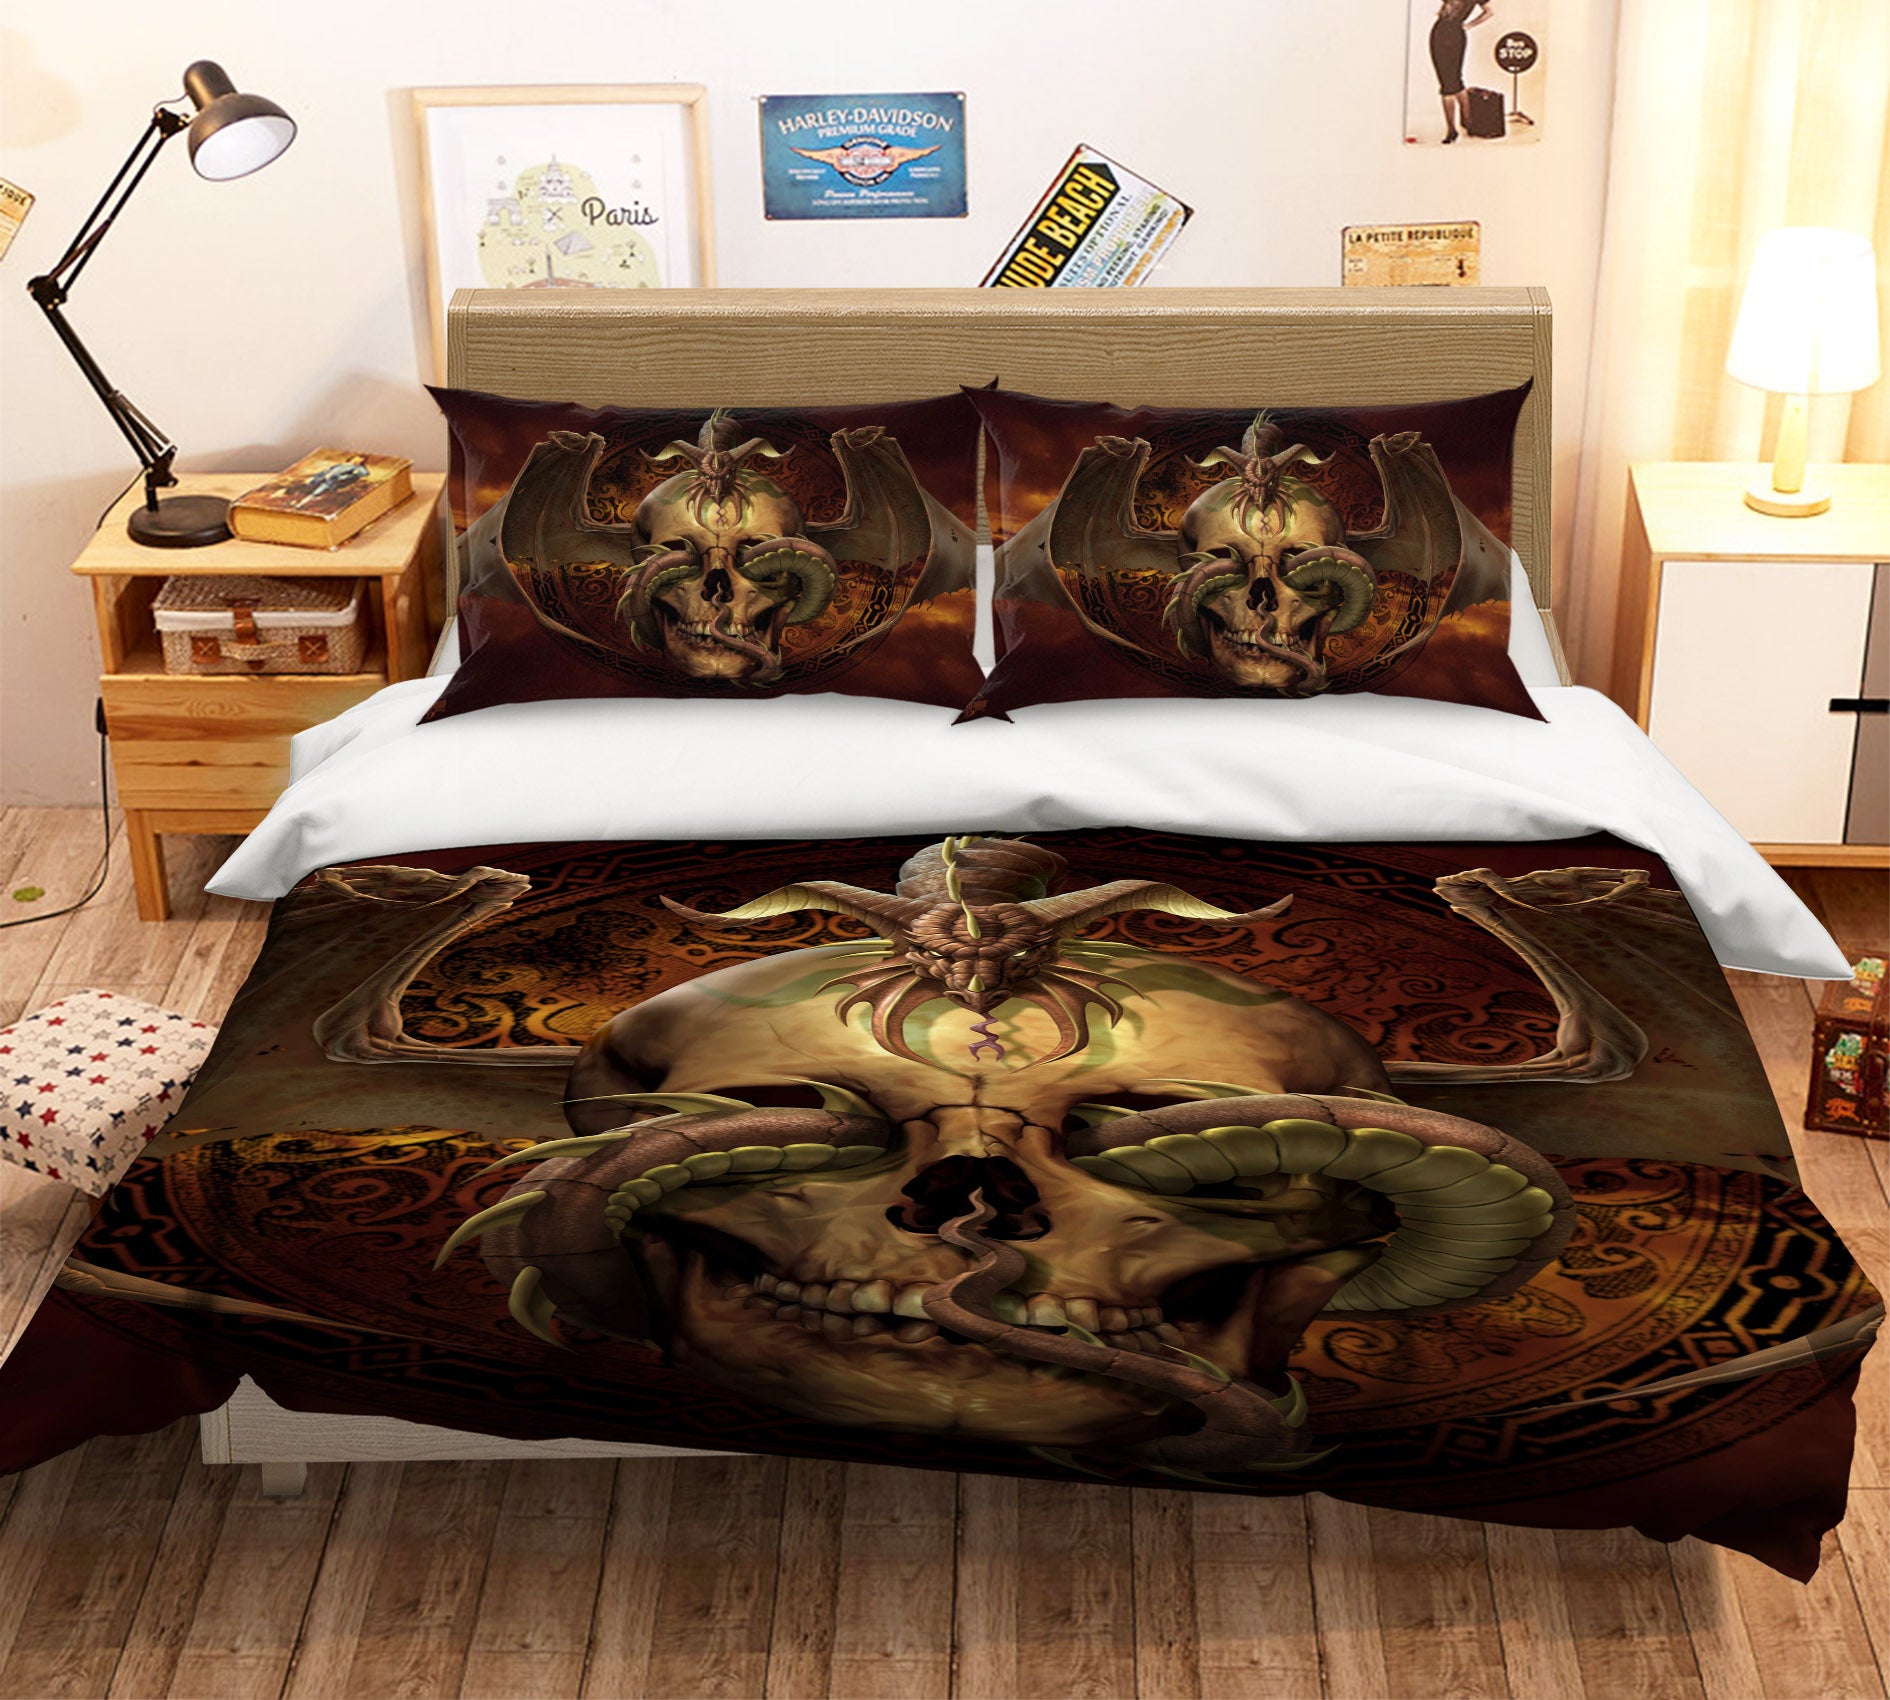 3D Skull Dragon 4075 Tom Wood Bedding Bed Pillowcases Quilt